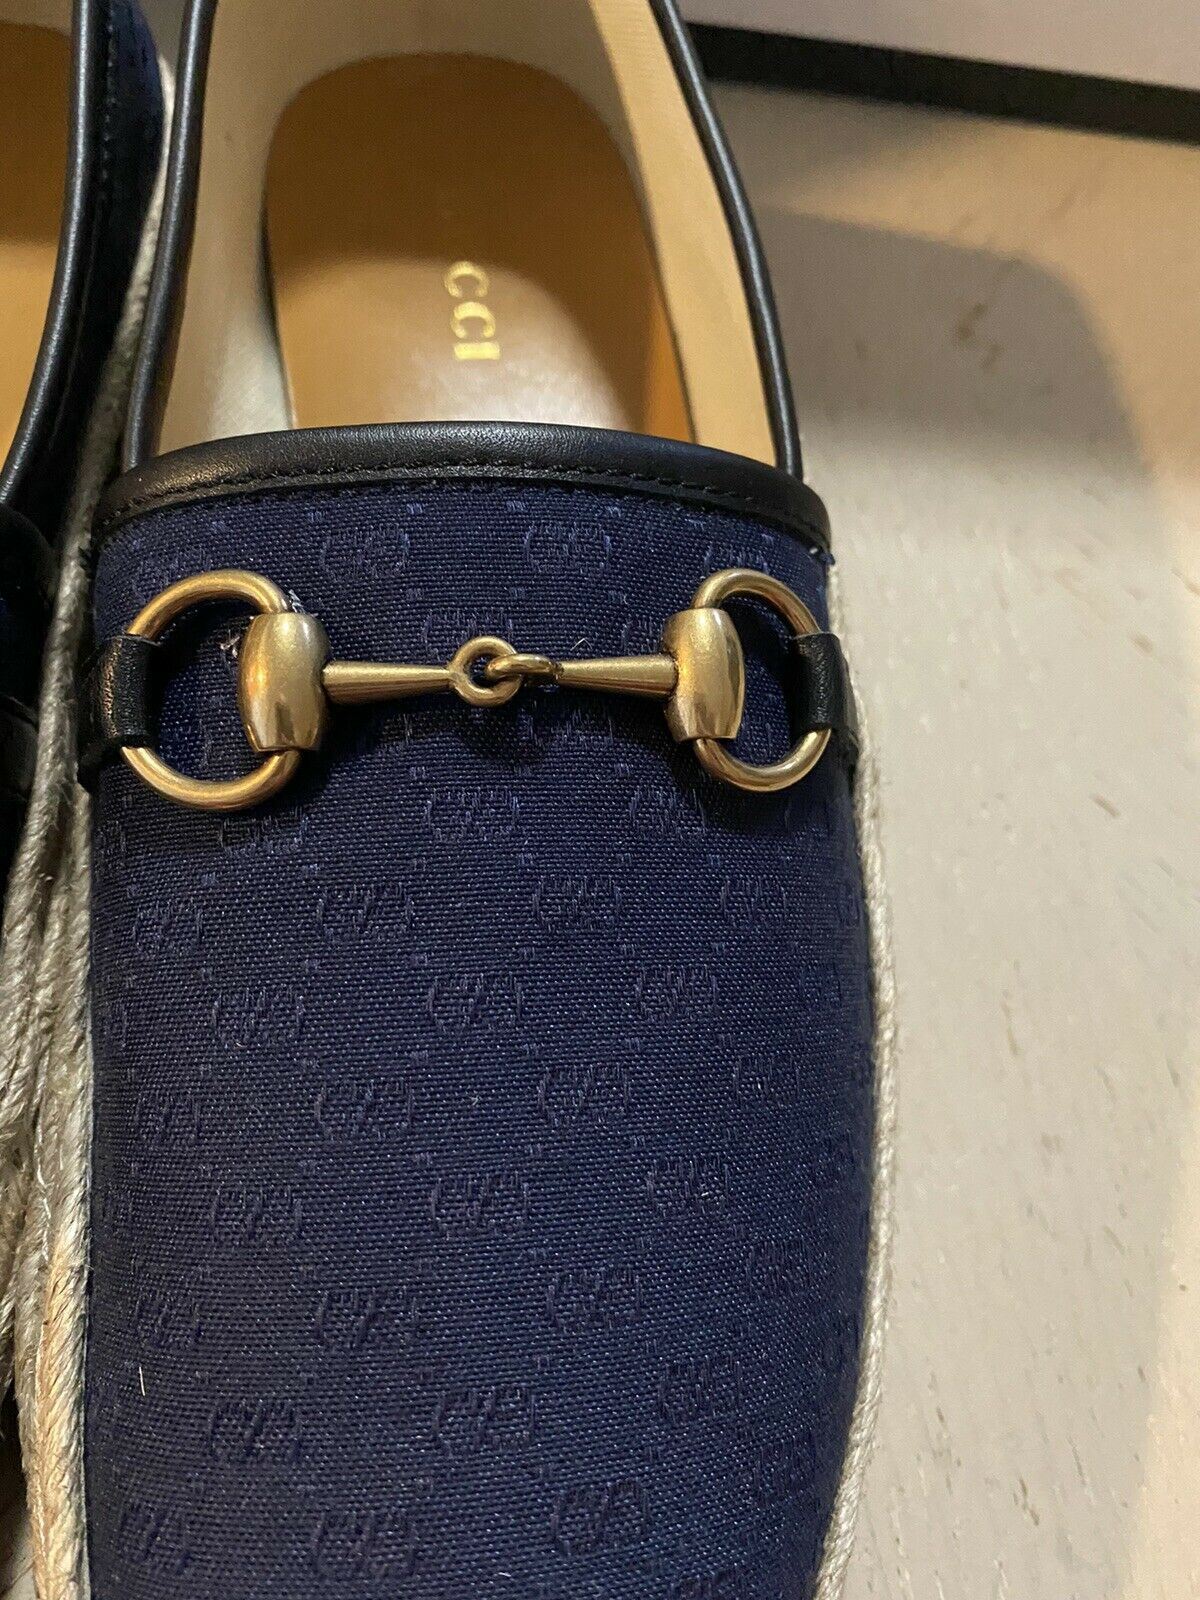 New Gucci Men GG Monogram Canvas/Leather Espadrille Shoes Blue 8.5 US/7.5 UK